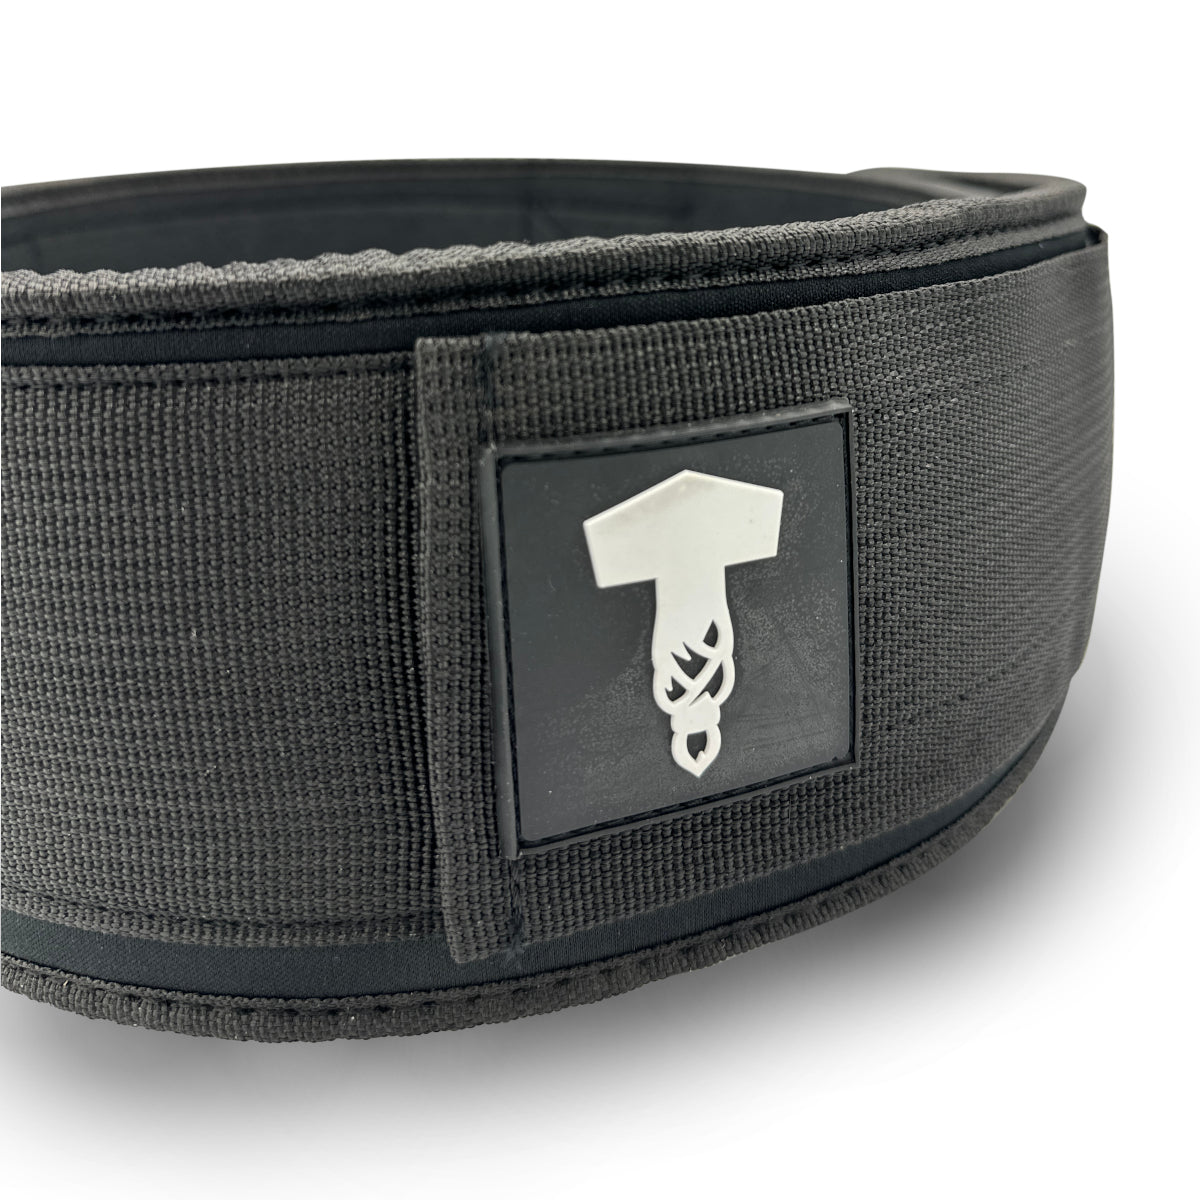 ModiFit Velcro Weightlifting Belt Black